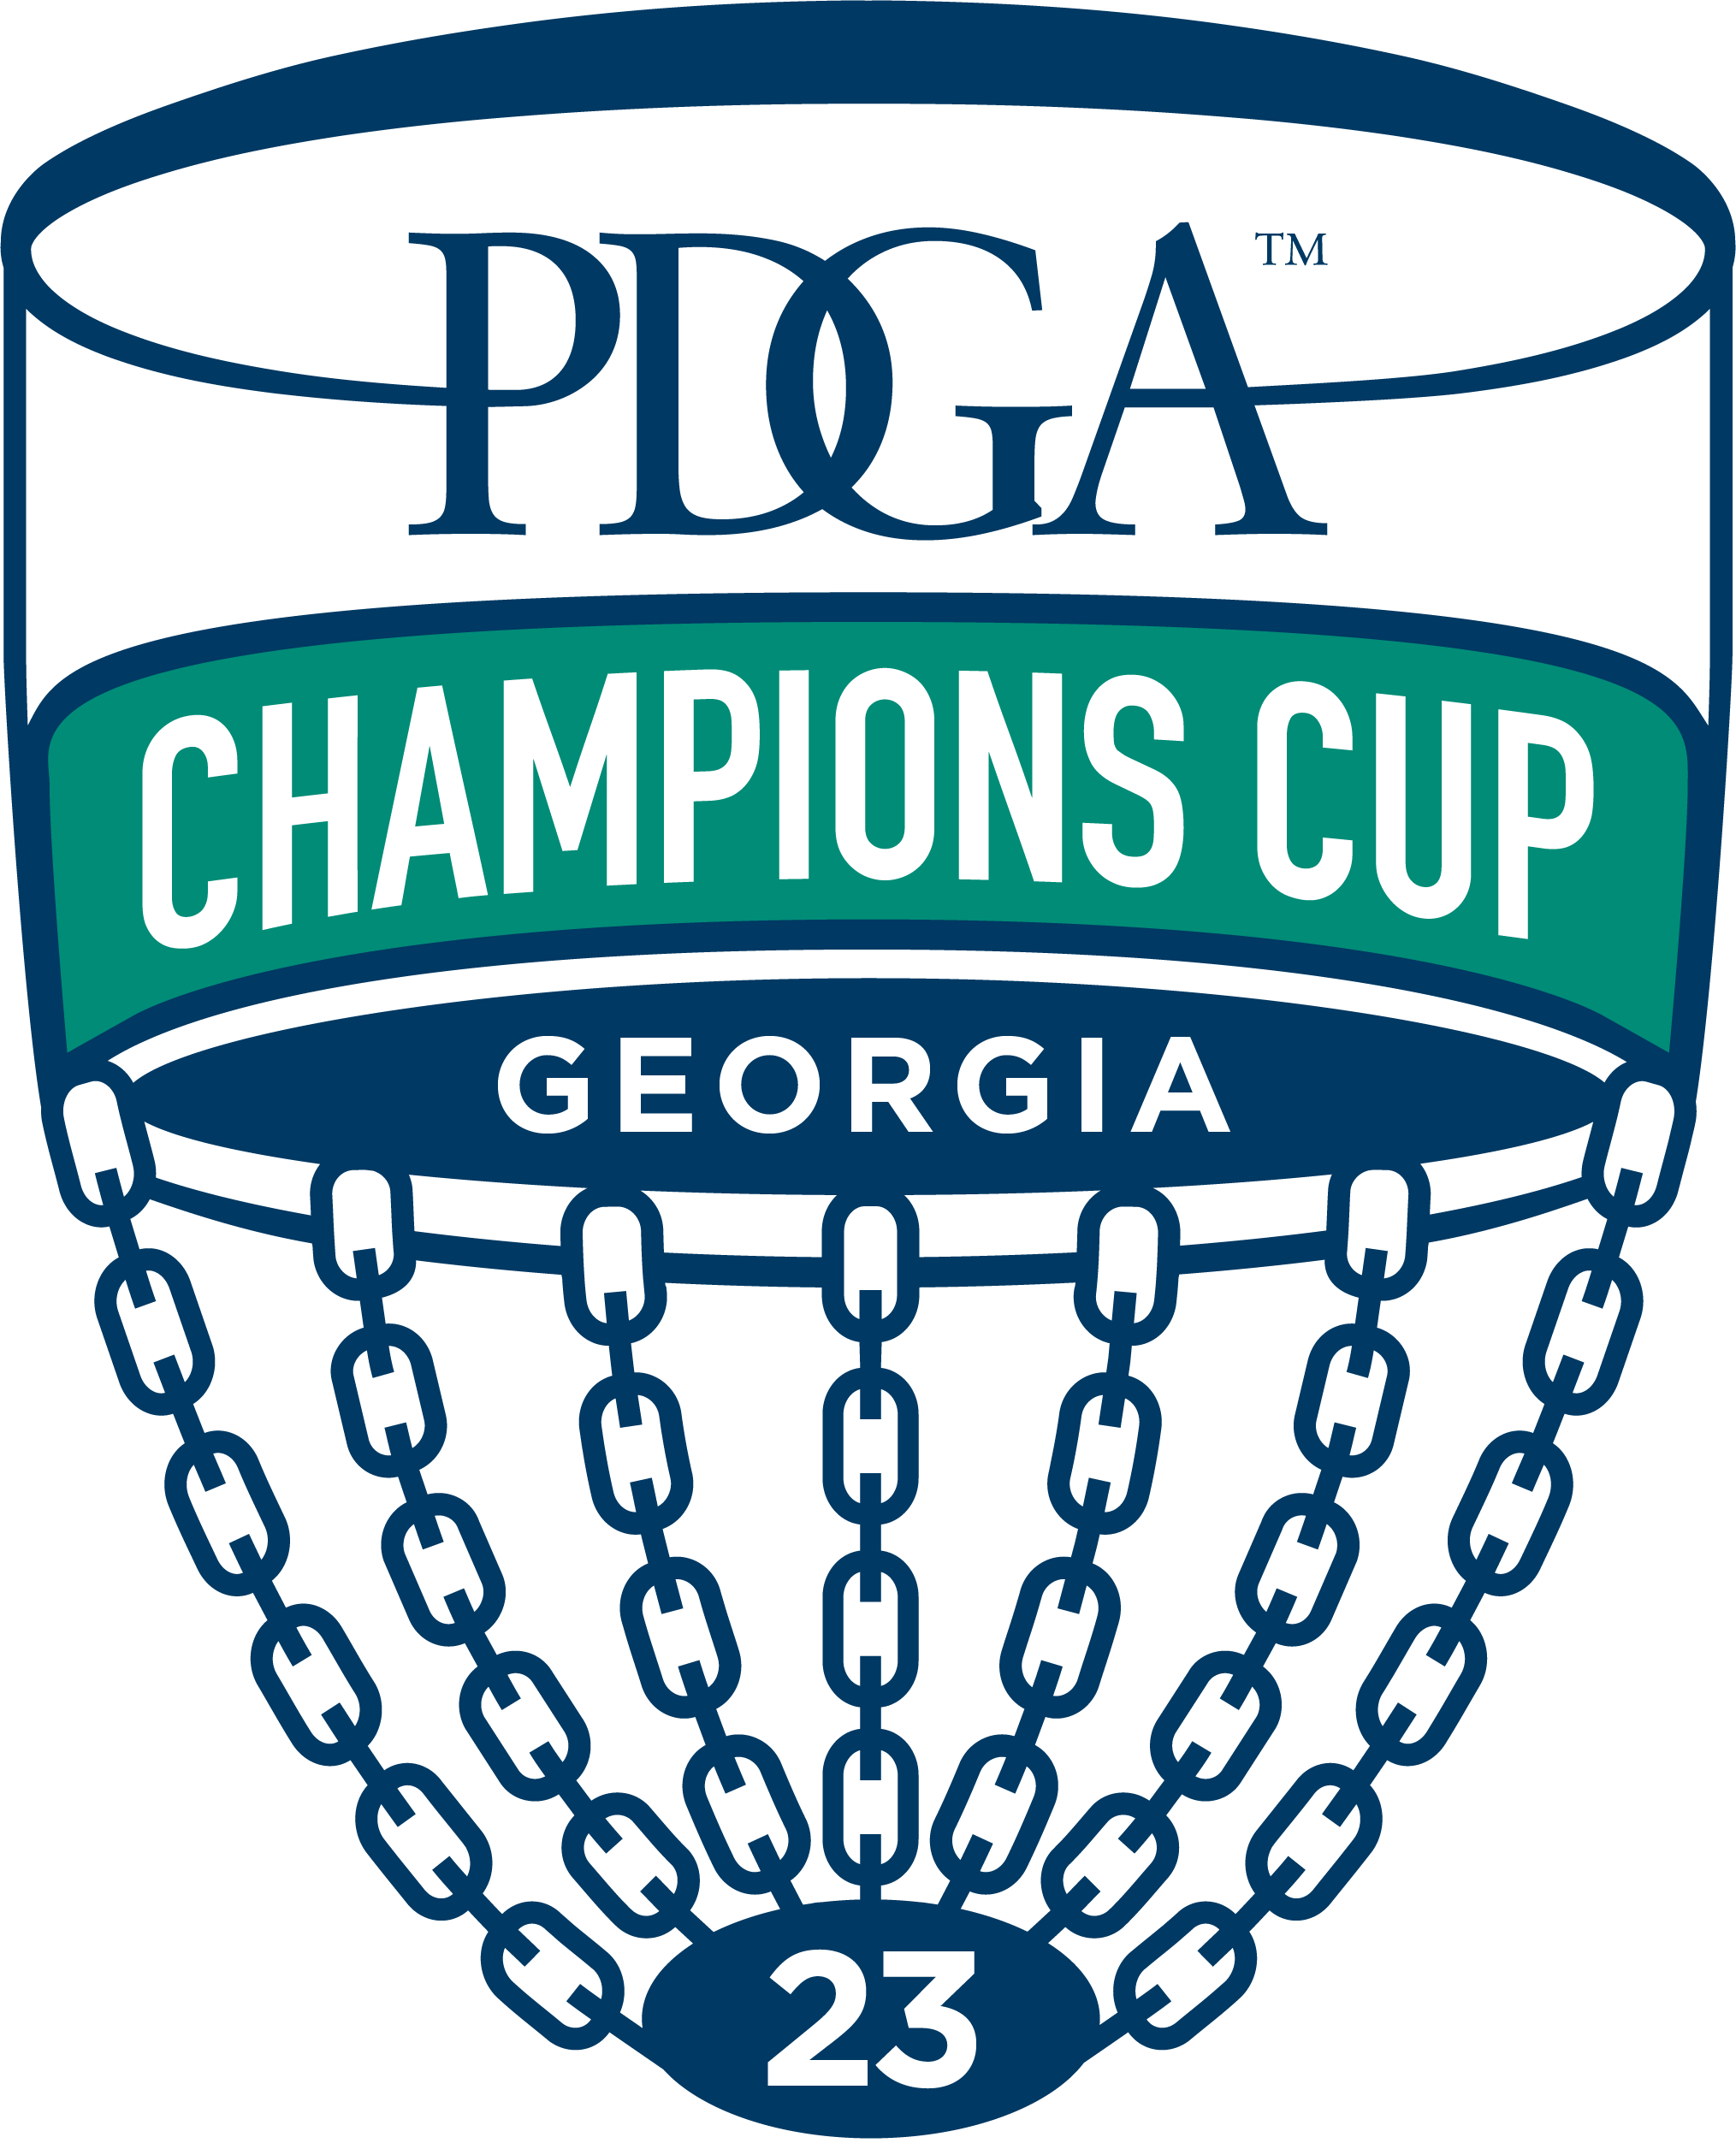 2022 PDGA Champions Cup Professional Disc Golf Association